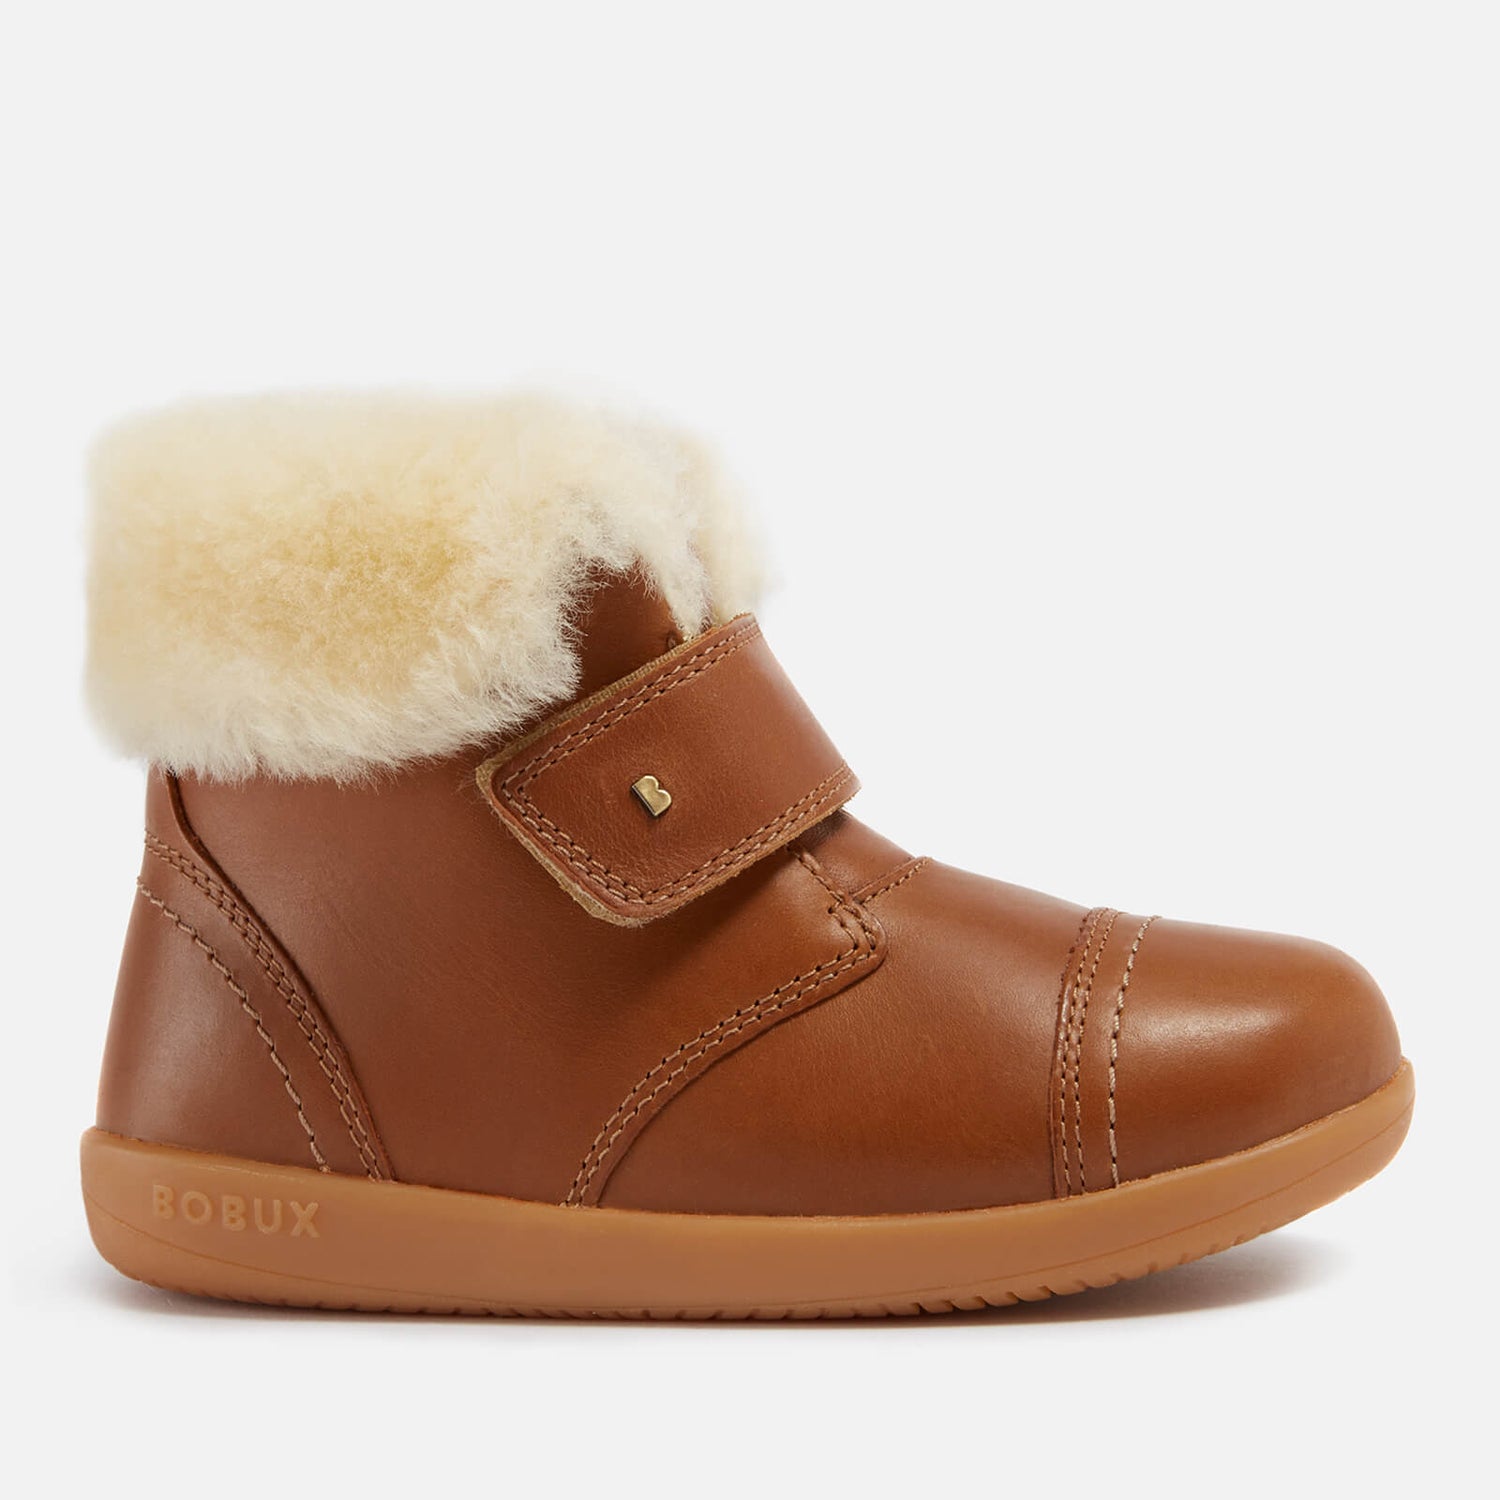 Bobux Kids Desert Arctic Fleece-Lined Leather Boots - UK 9 Kids